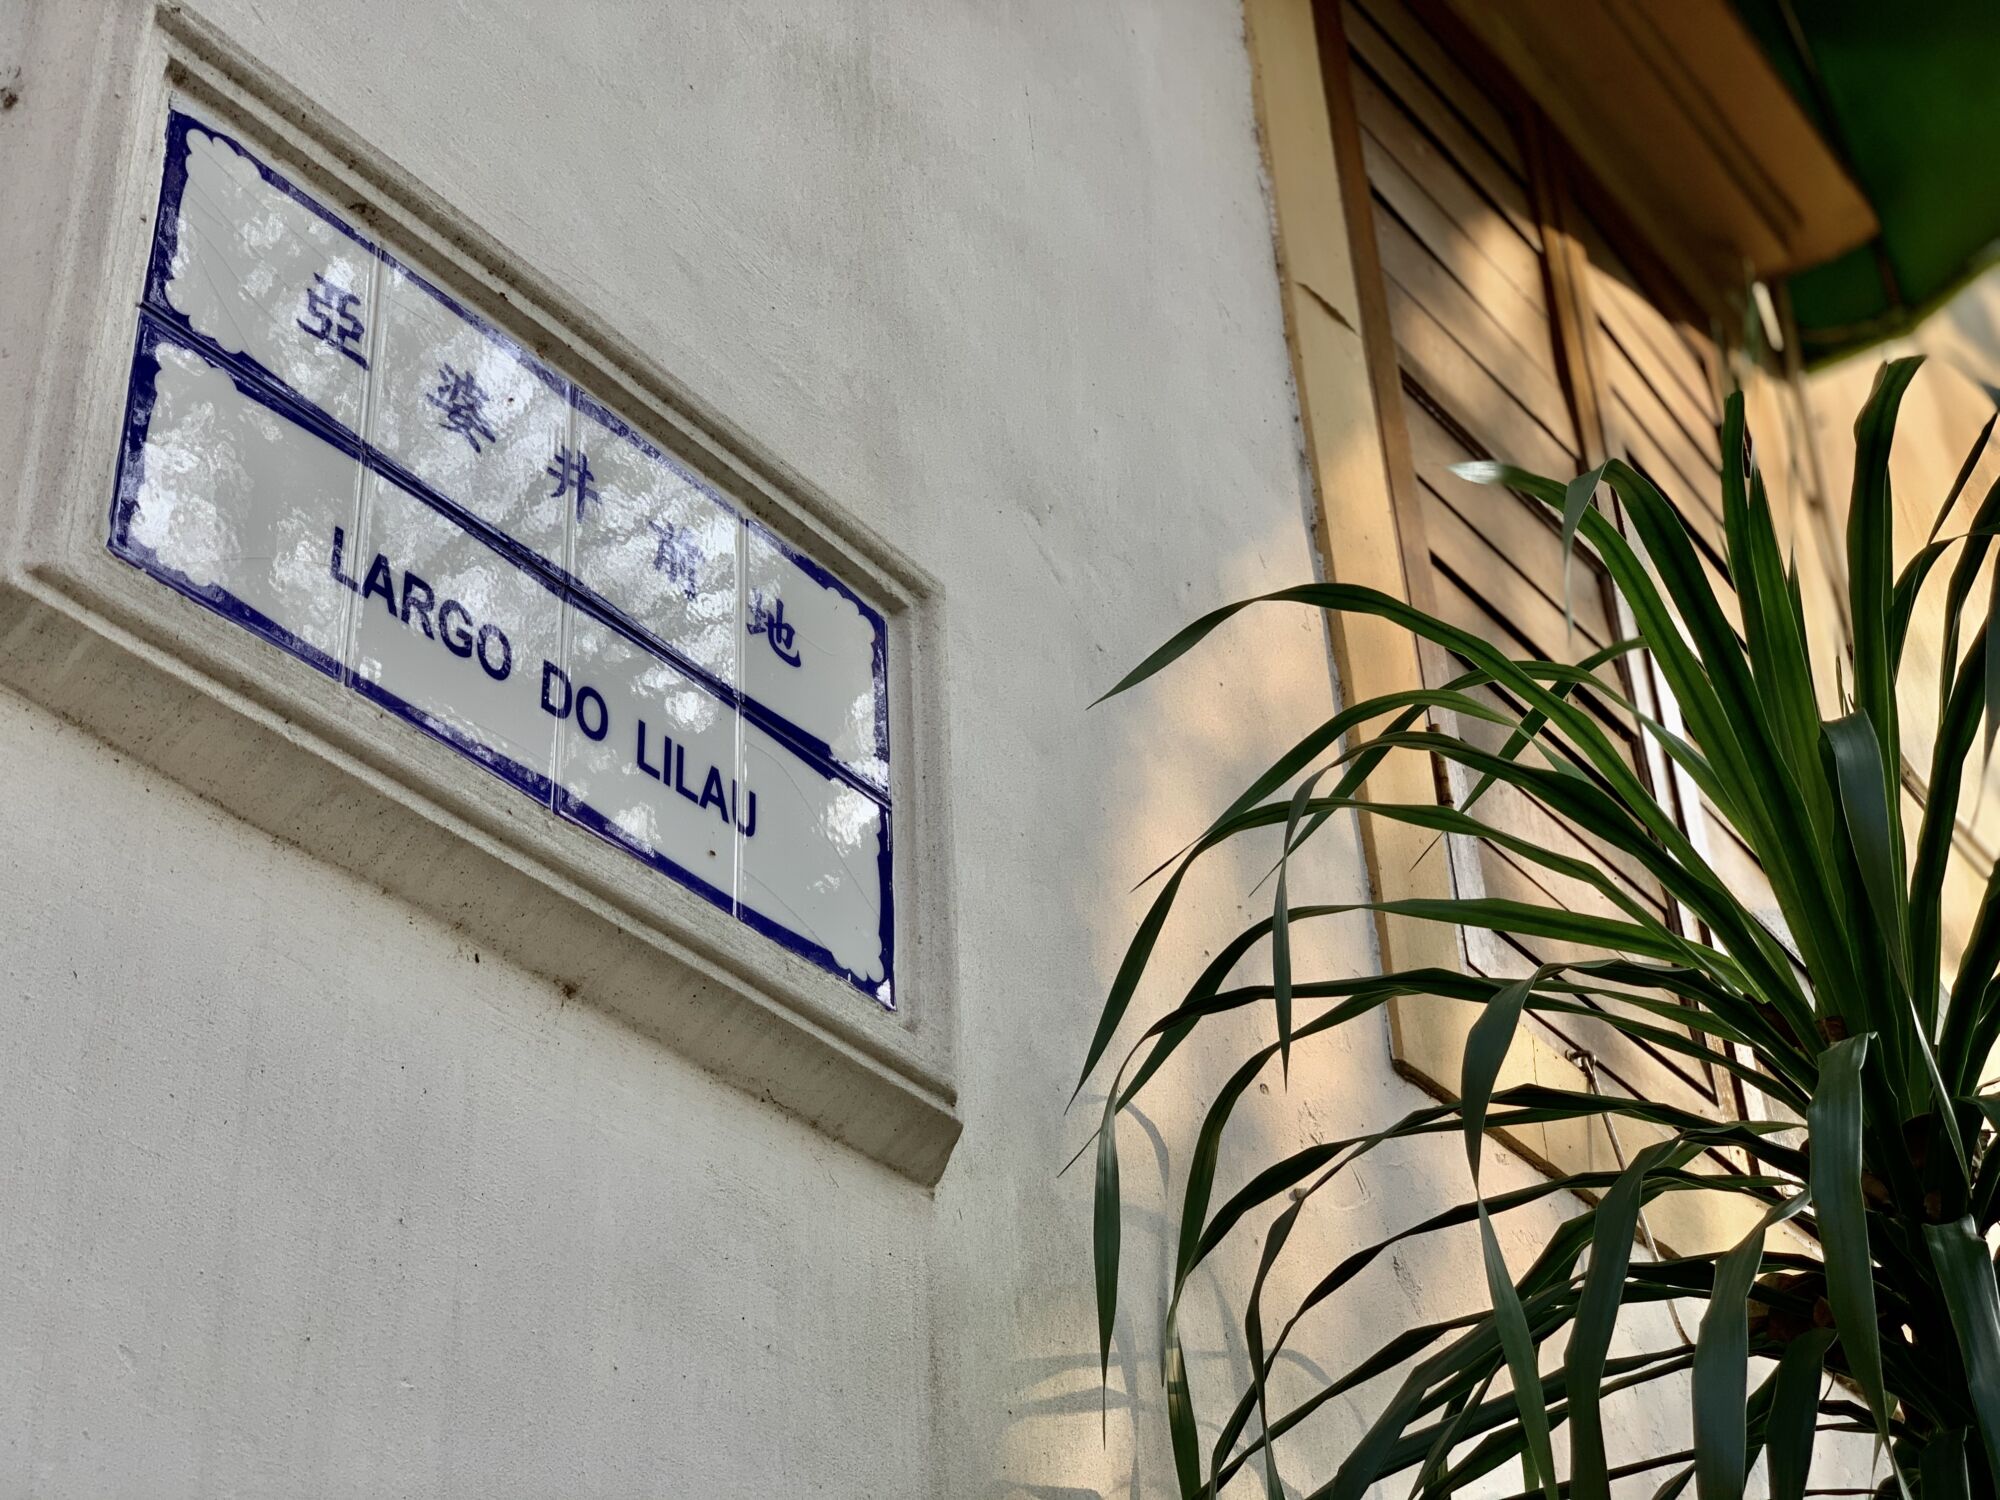 Lilau Square Plaque on the Wall Detail Macau Lifestyle